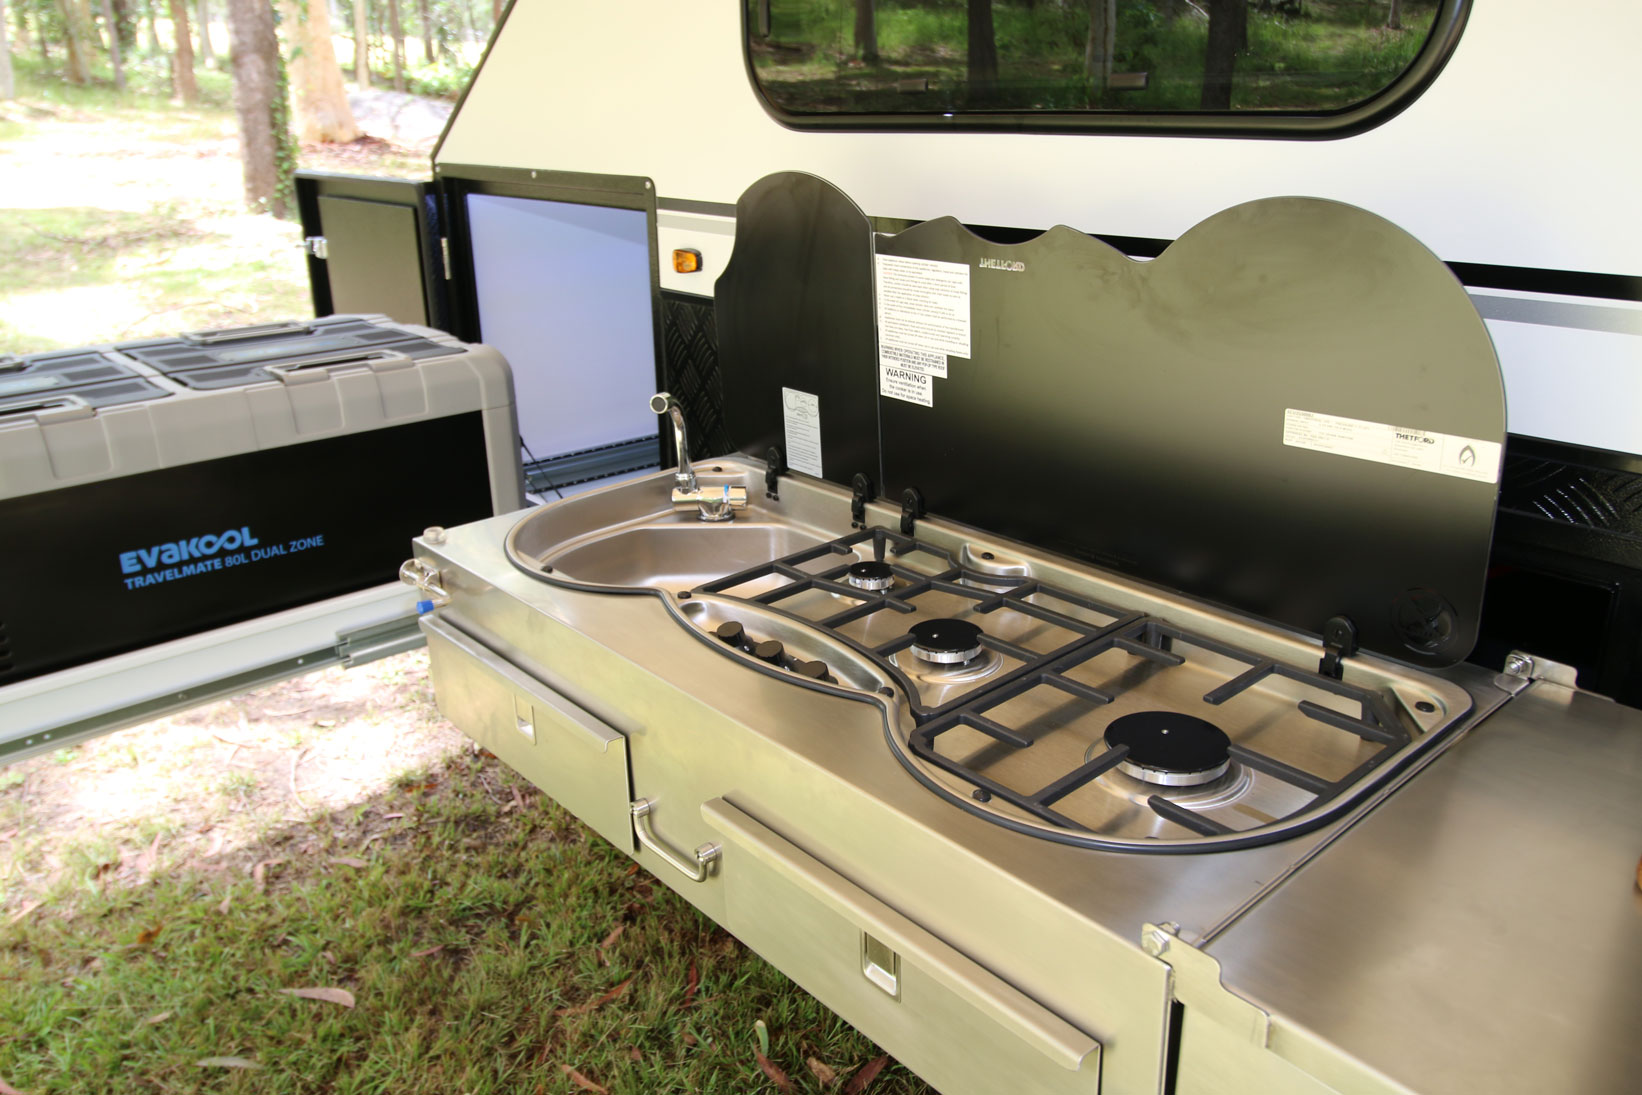 Modcon RV off road hybrid camper trailers C3P kitchen and fridge